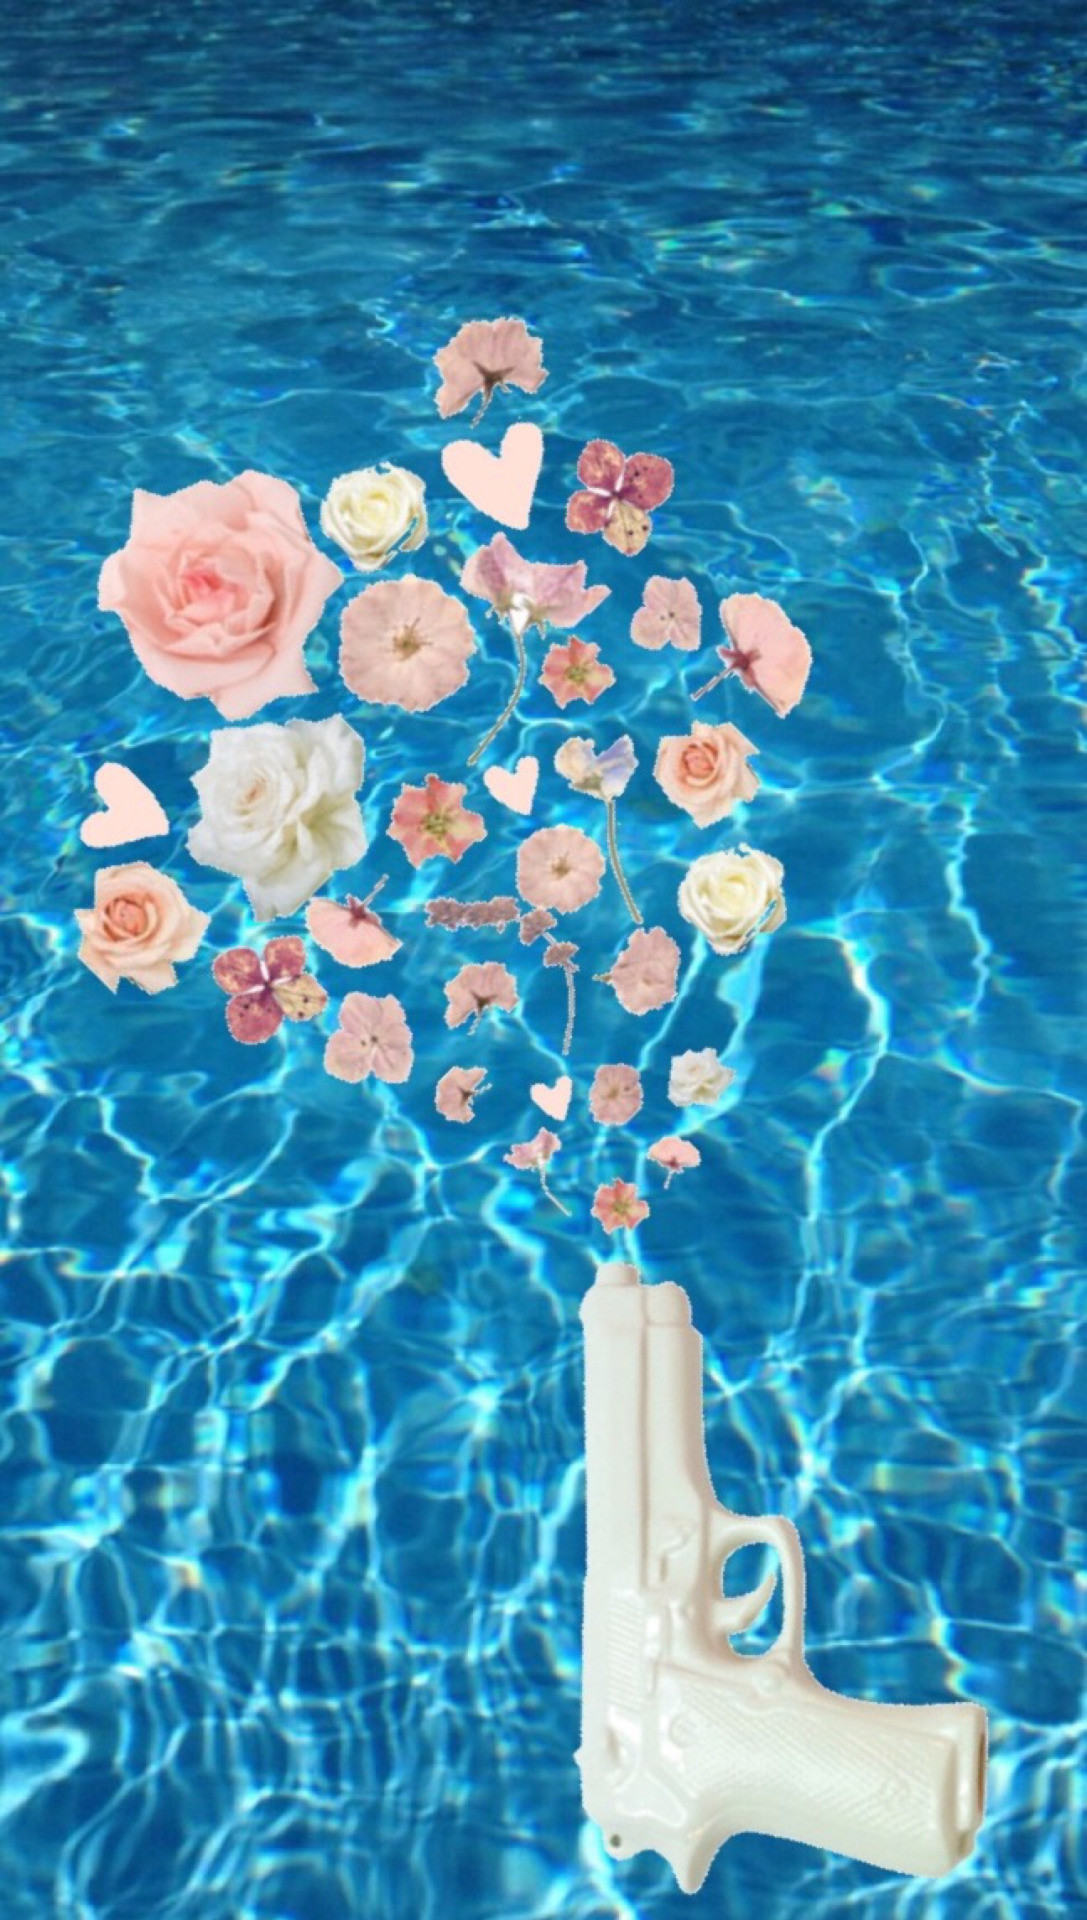 Water Background Tumblr ·① WallpaperTag